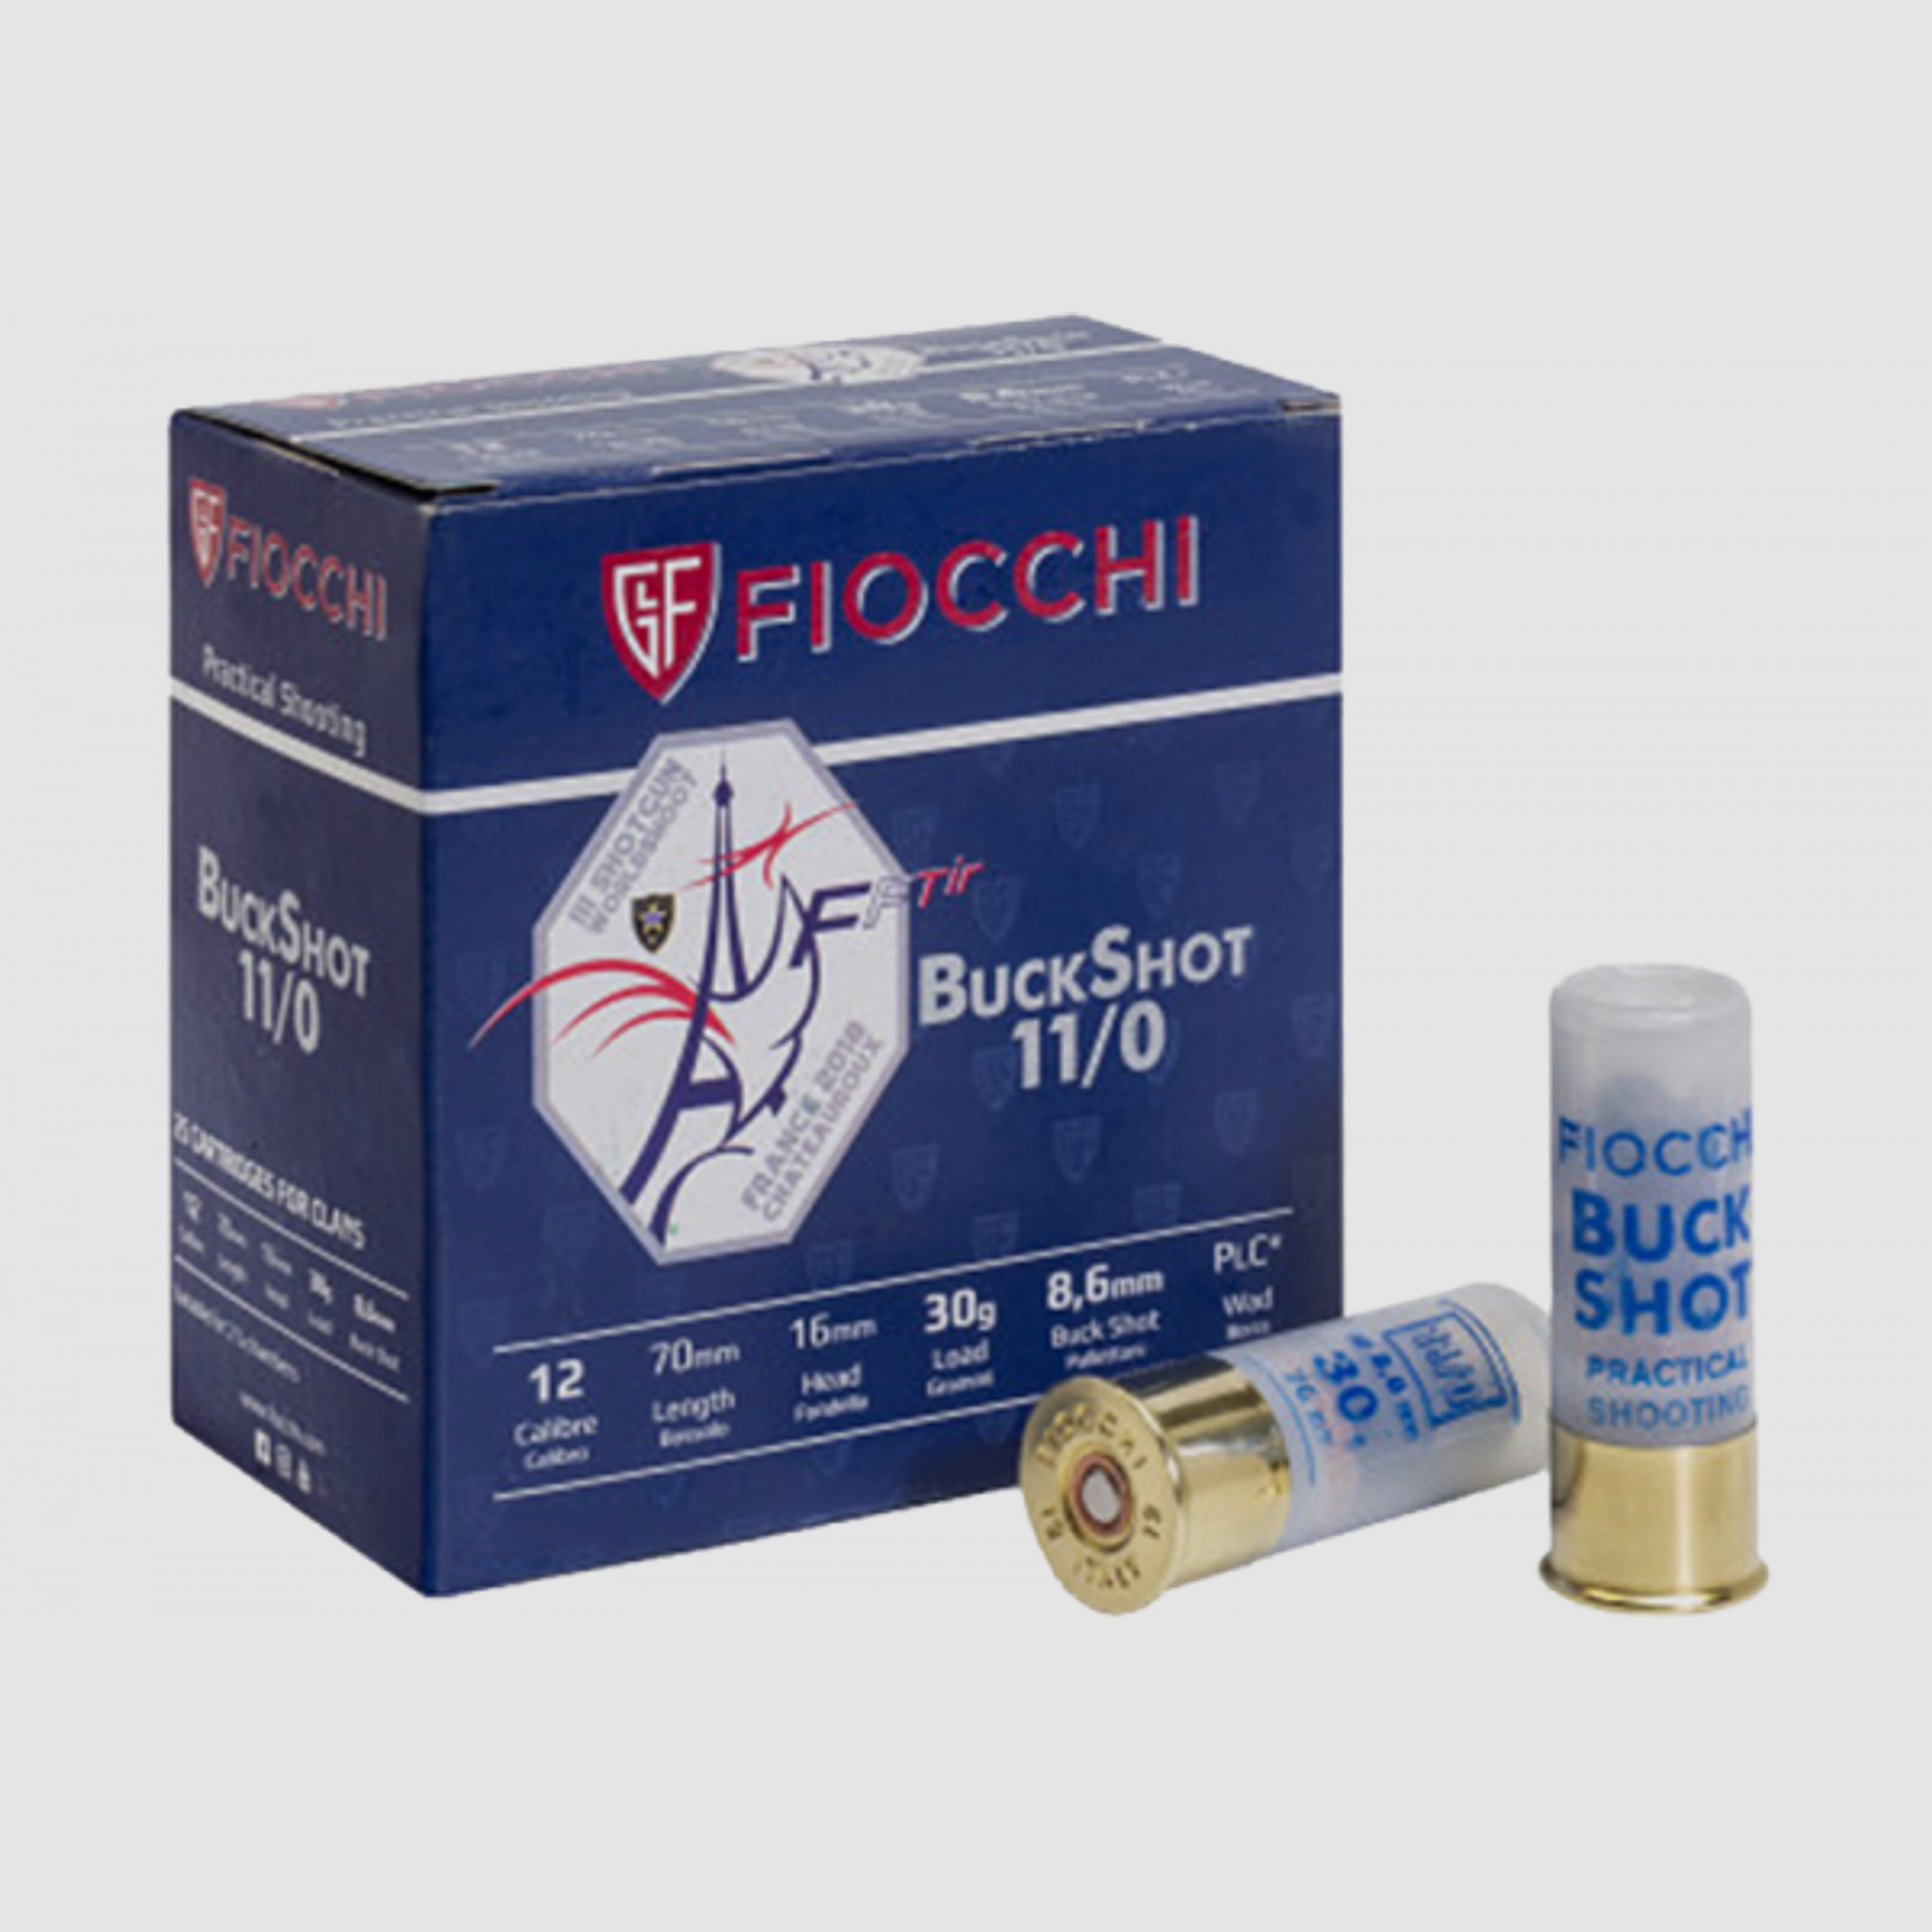 Fiocchi Buckshot Practical Shooting 12/70 30,5 gr Schrotpatronen